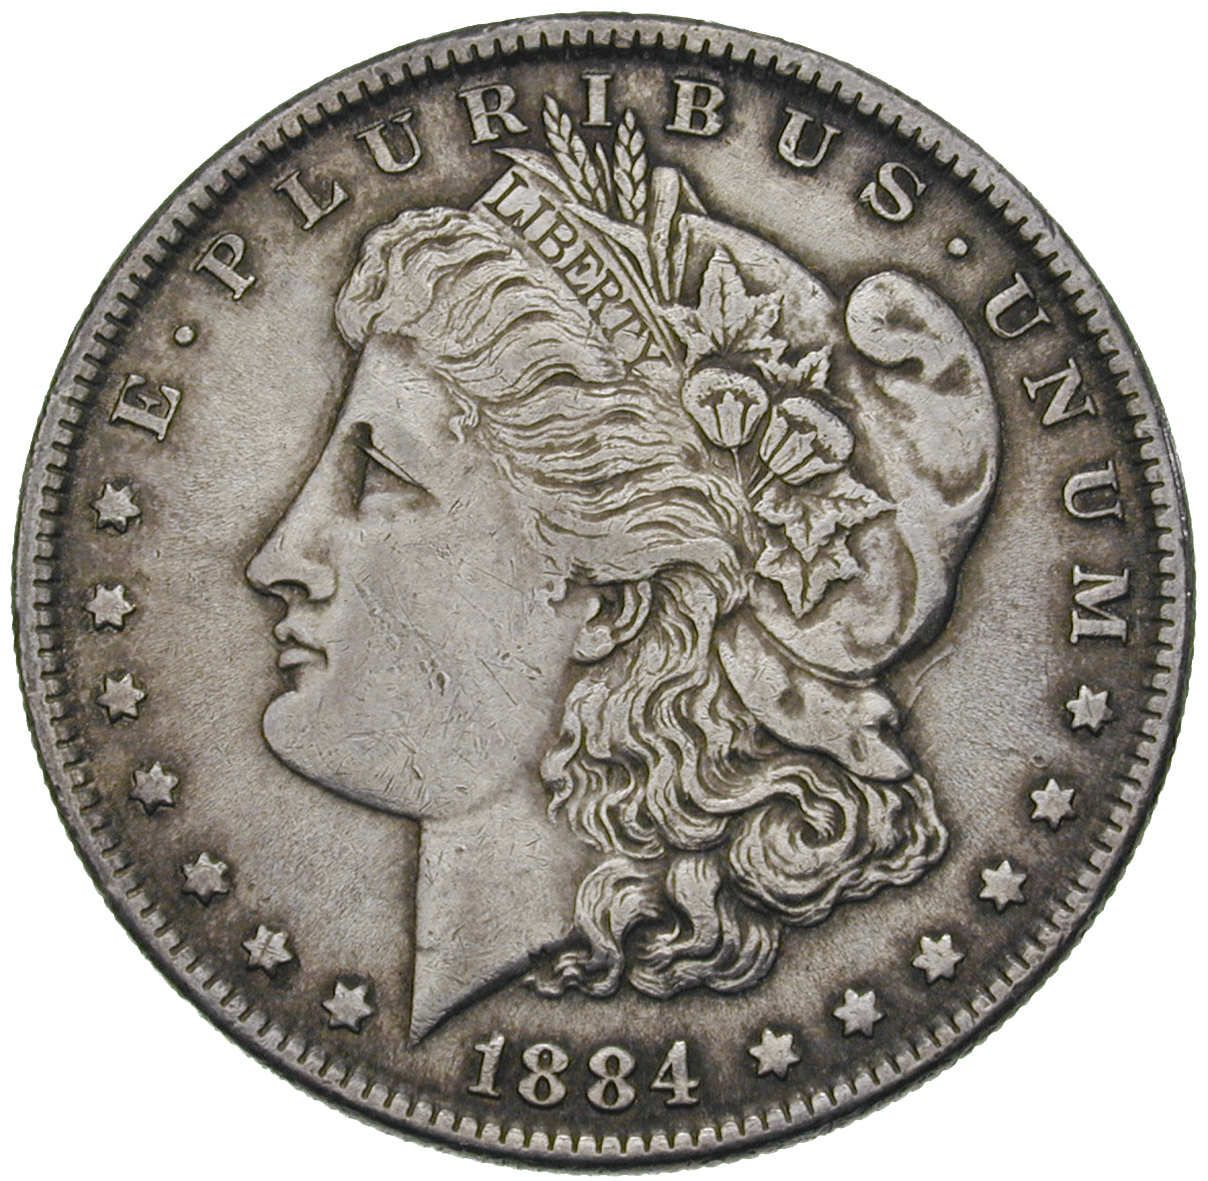 United States of America, 1 Dollar 1884 (obverse)